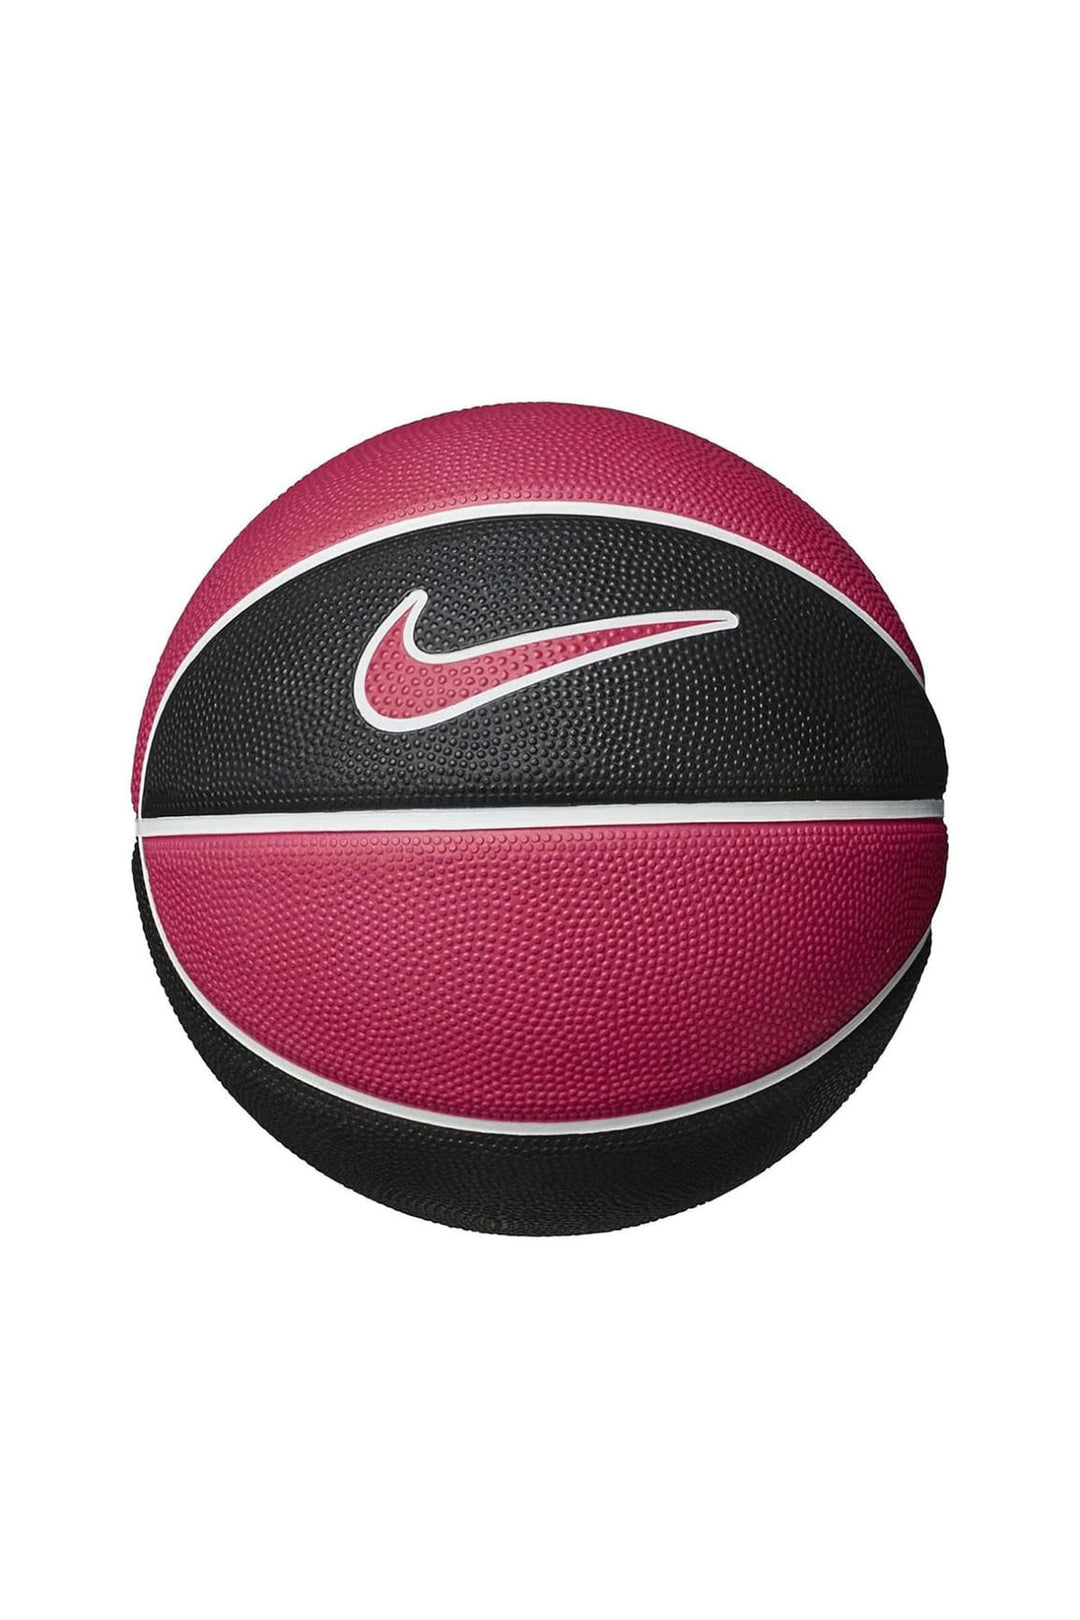 Nike Skills Revival Size 3 Basketball - Black/Maroon